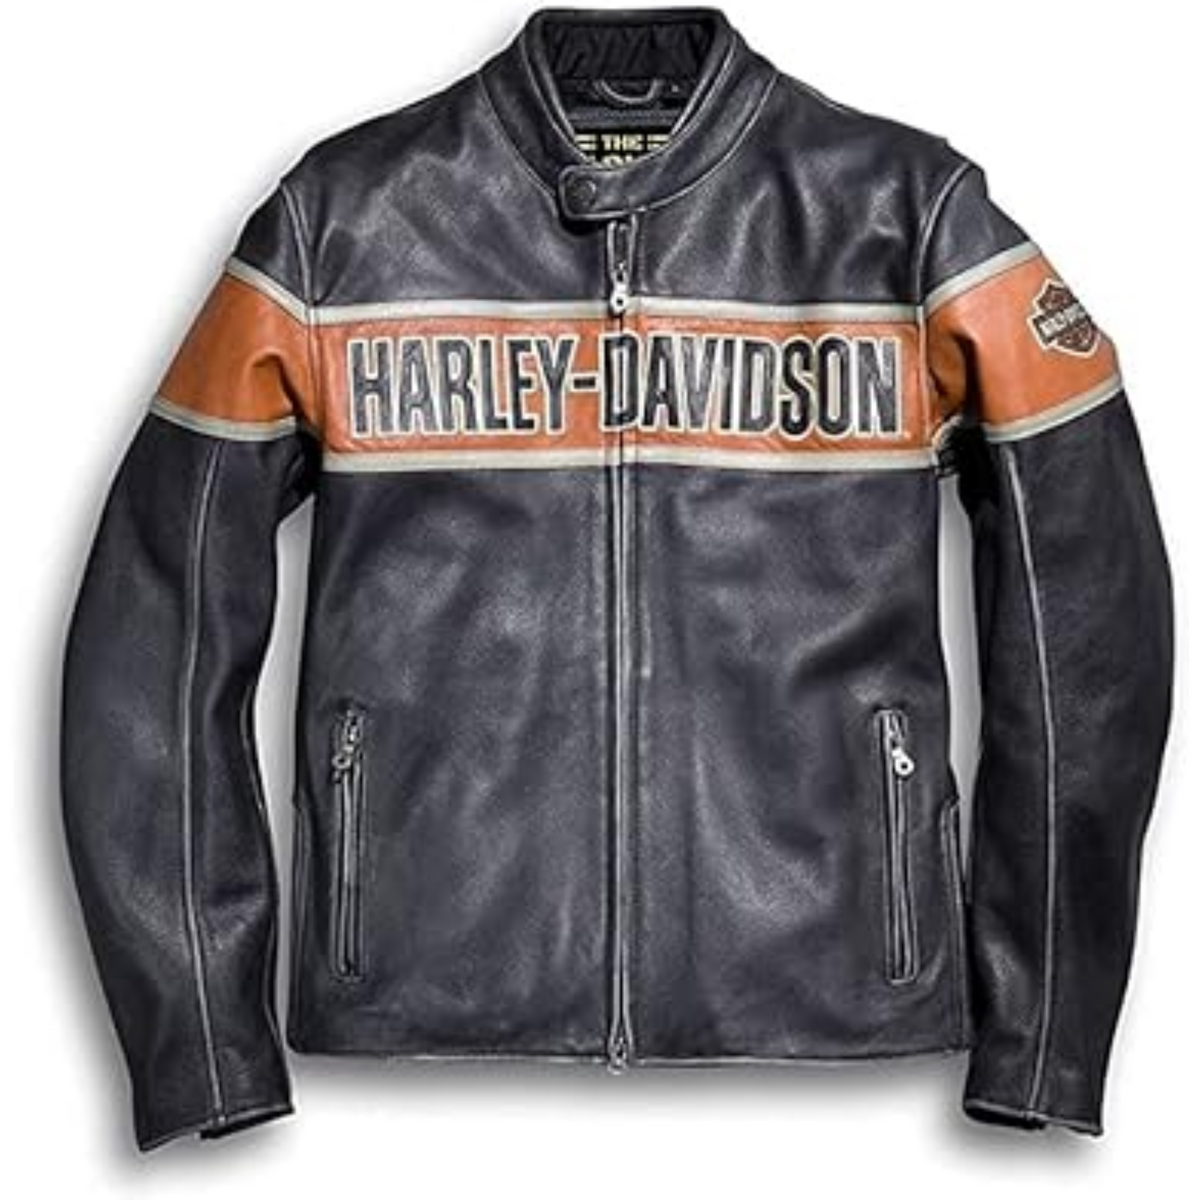 Men’s American Black Motorcycle Victory Lane Biker Leather Jacket: Classic Bikers' Choice